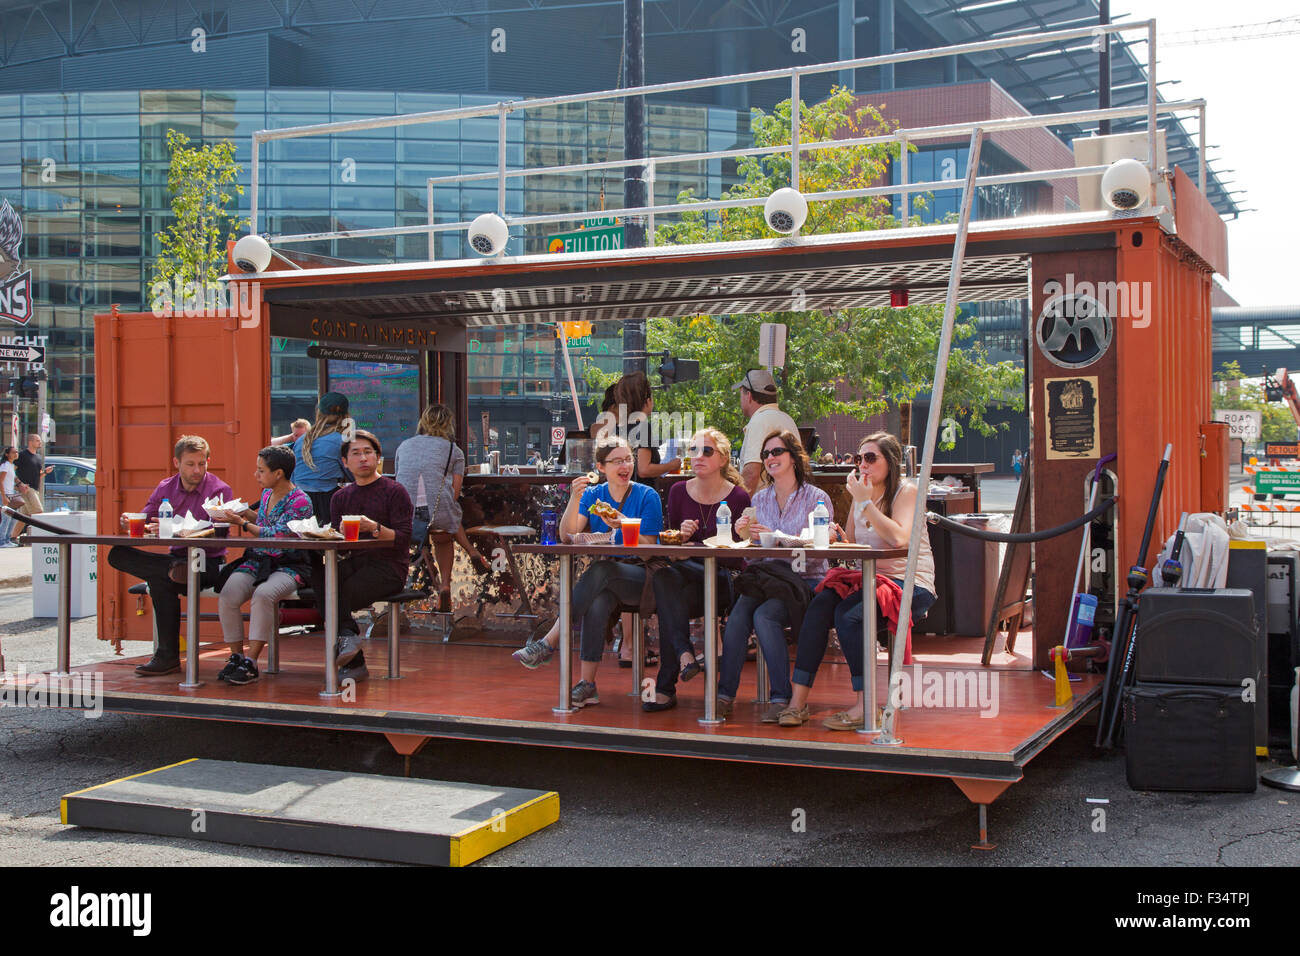 Grand Rapids, Michigan - un contenedor de transporte convierten a un bar/restaurante durante el anual Festival ArtPrize. Foto de stock